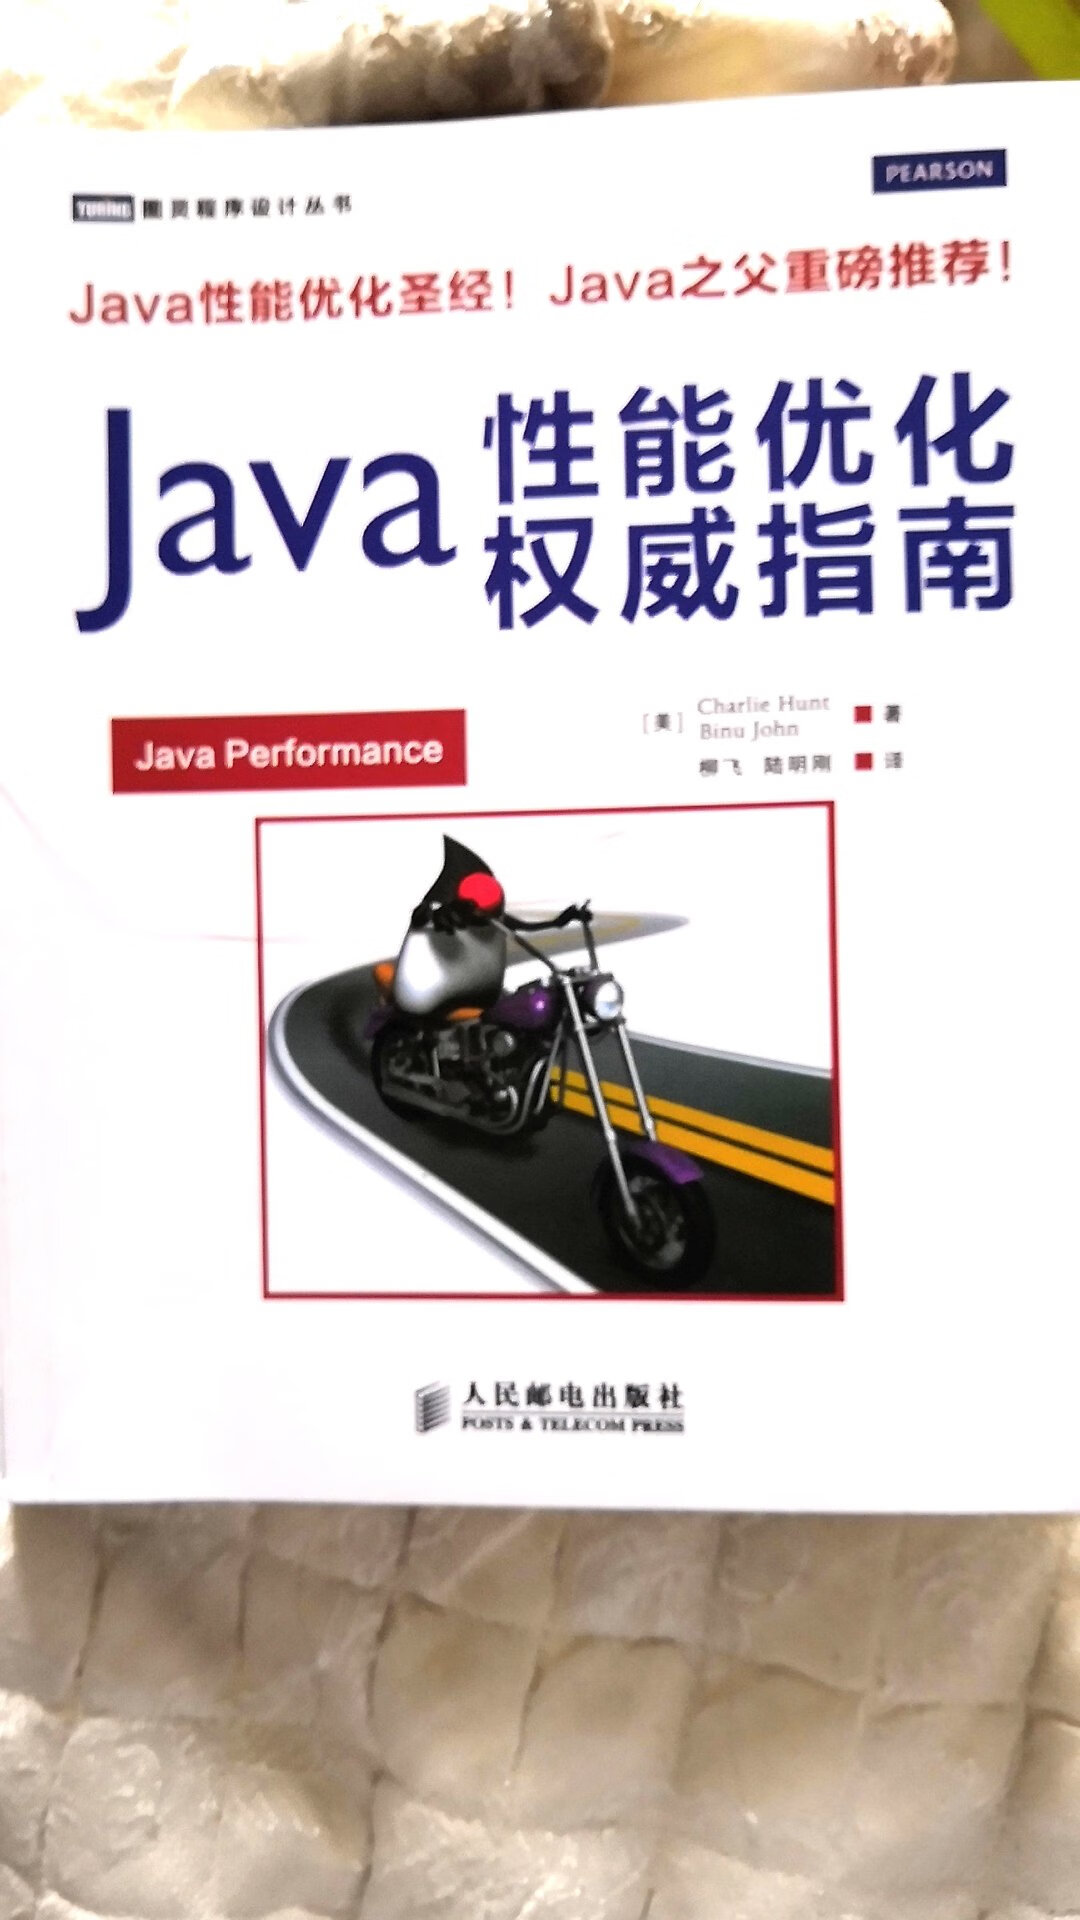 Java性能优化权威指南，纸张质量不错，印刷也清晰